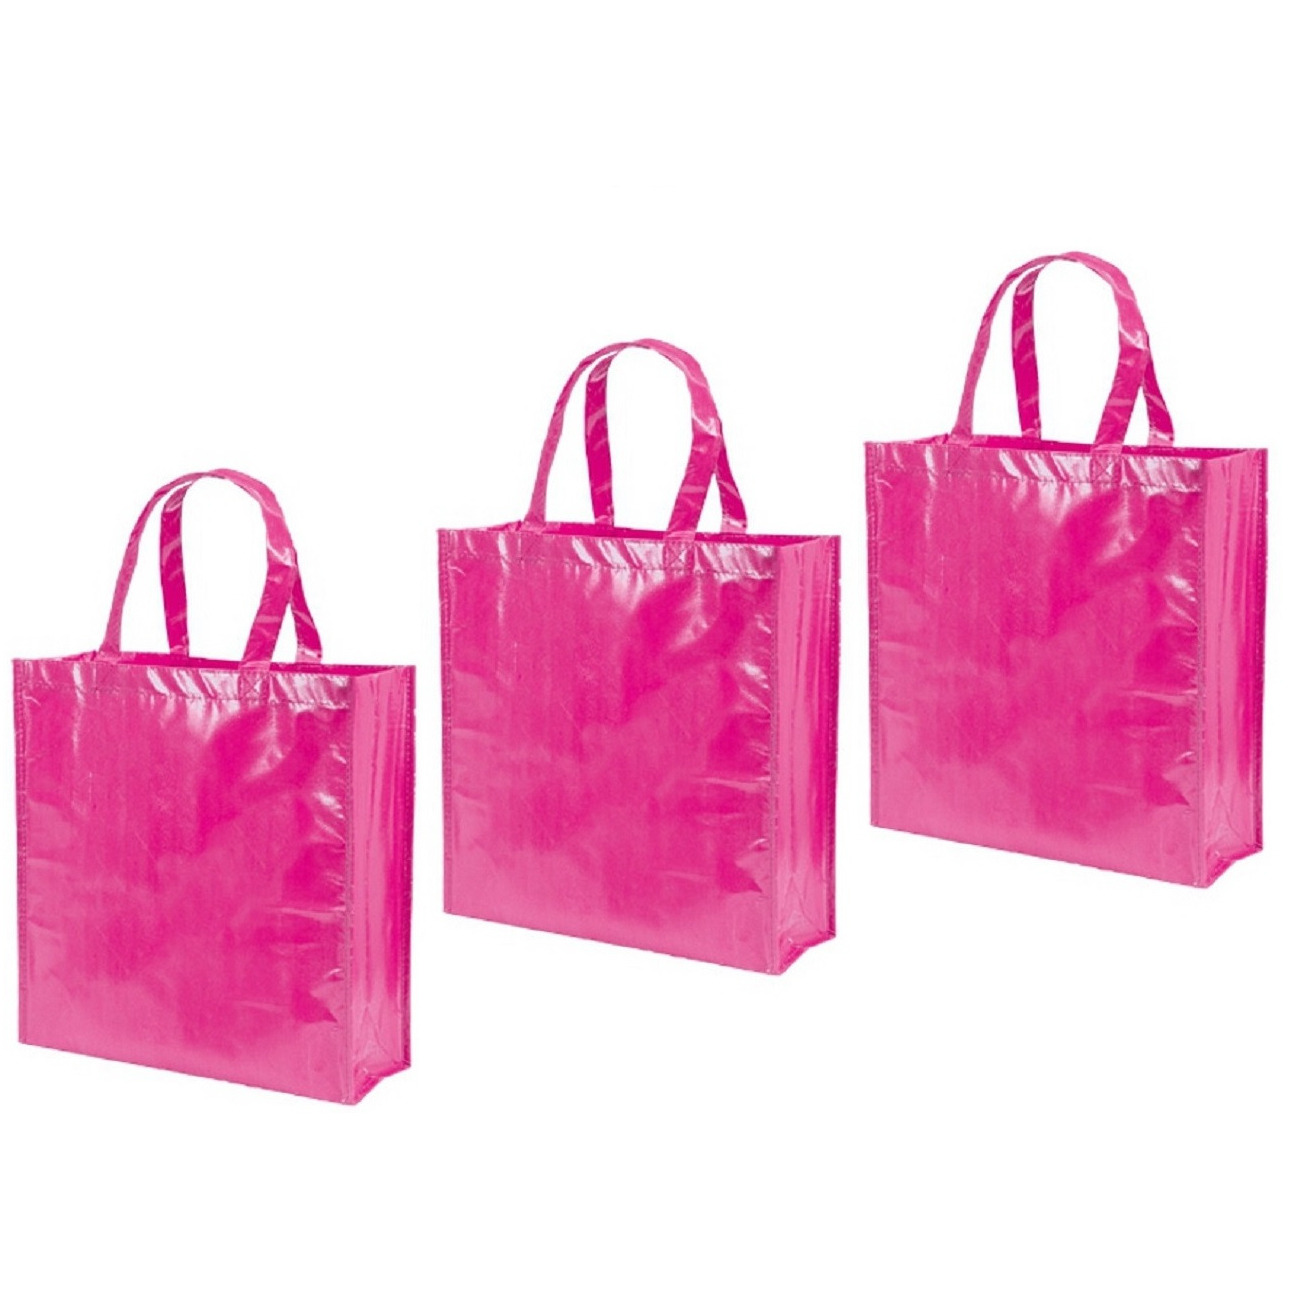 3x stuks boodschappentassen shoppers fuchsia roze 38 cm